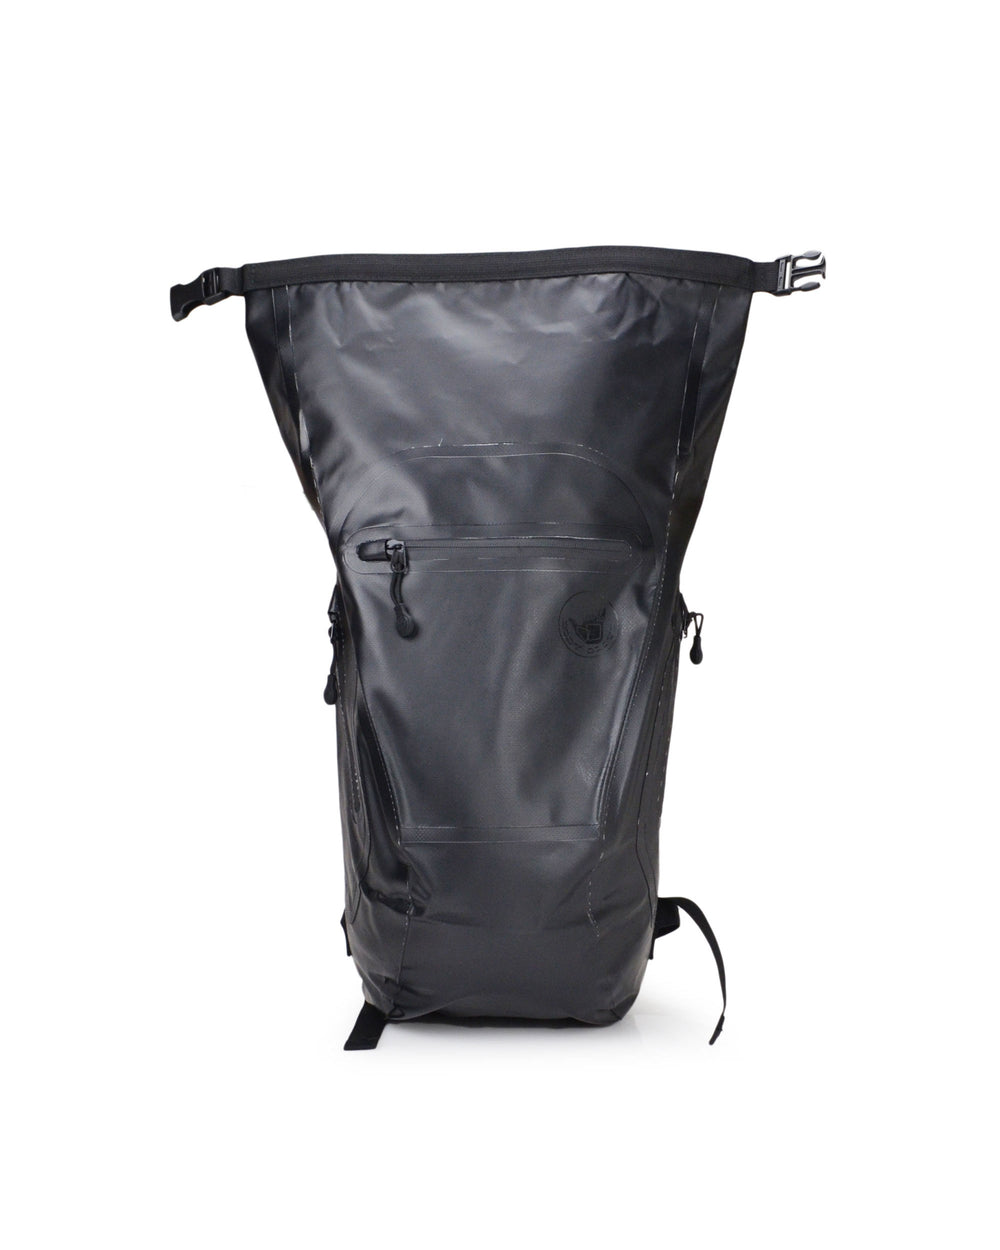 Advenire Waterproof Vertical Roll-Top Backpack - Black - Body Glove